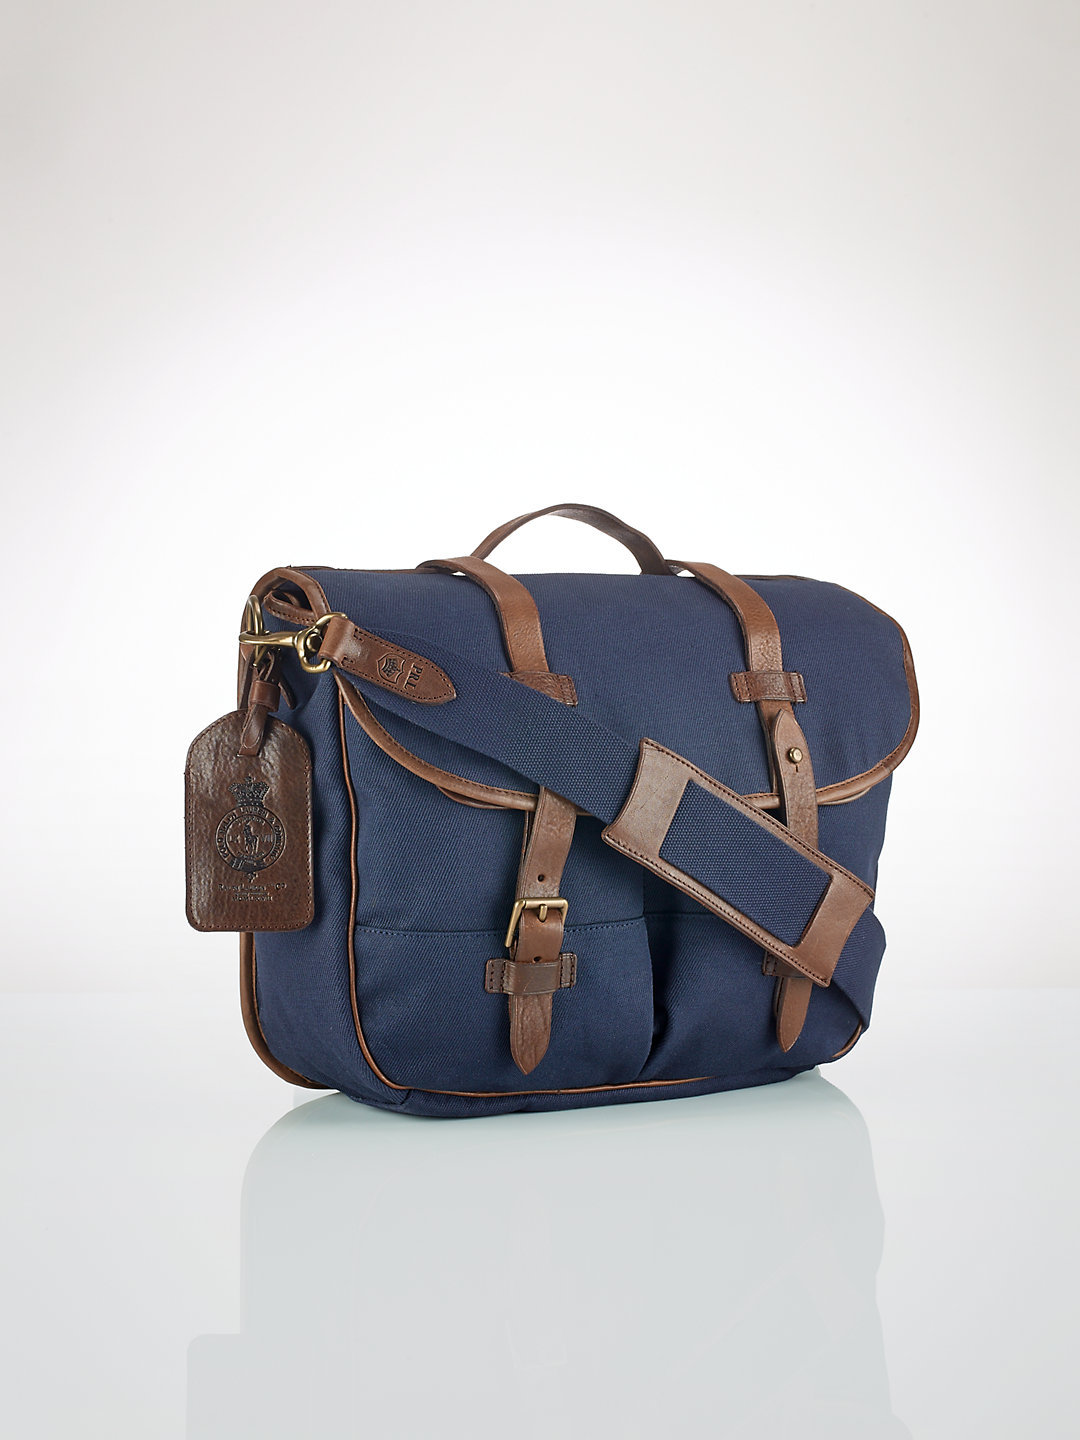 It's On Sale: Ralph Lauren Fishing Bag – Put This On